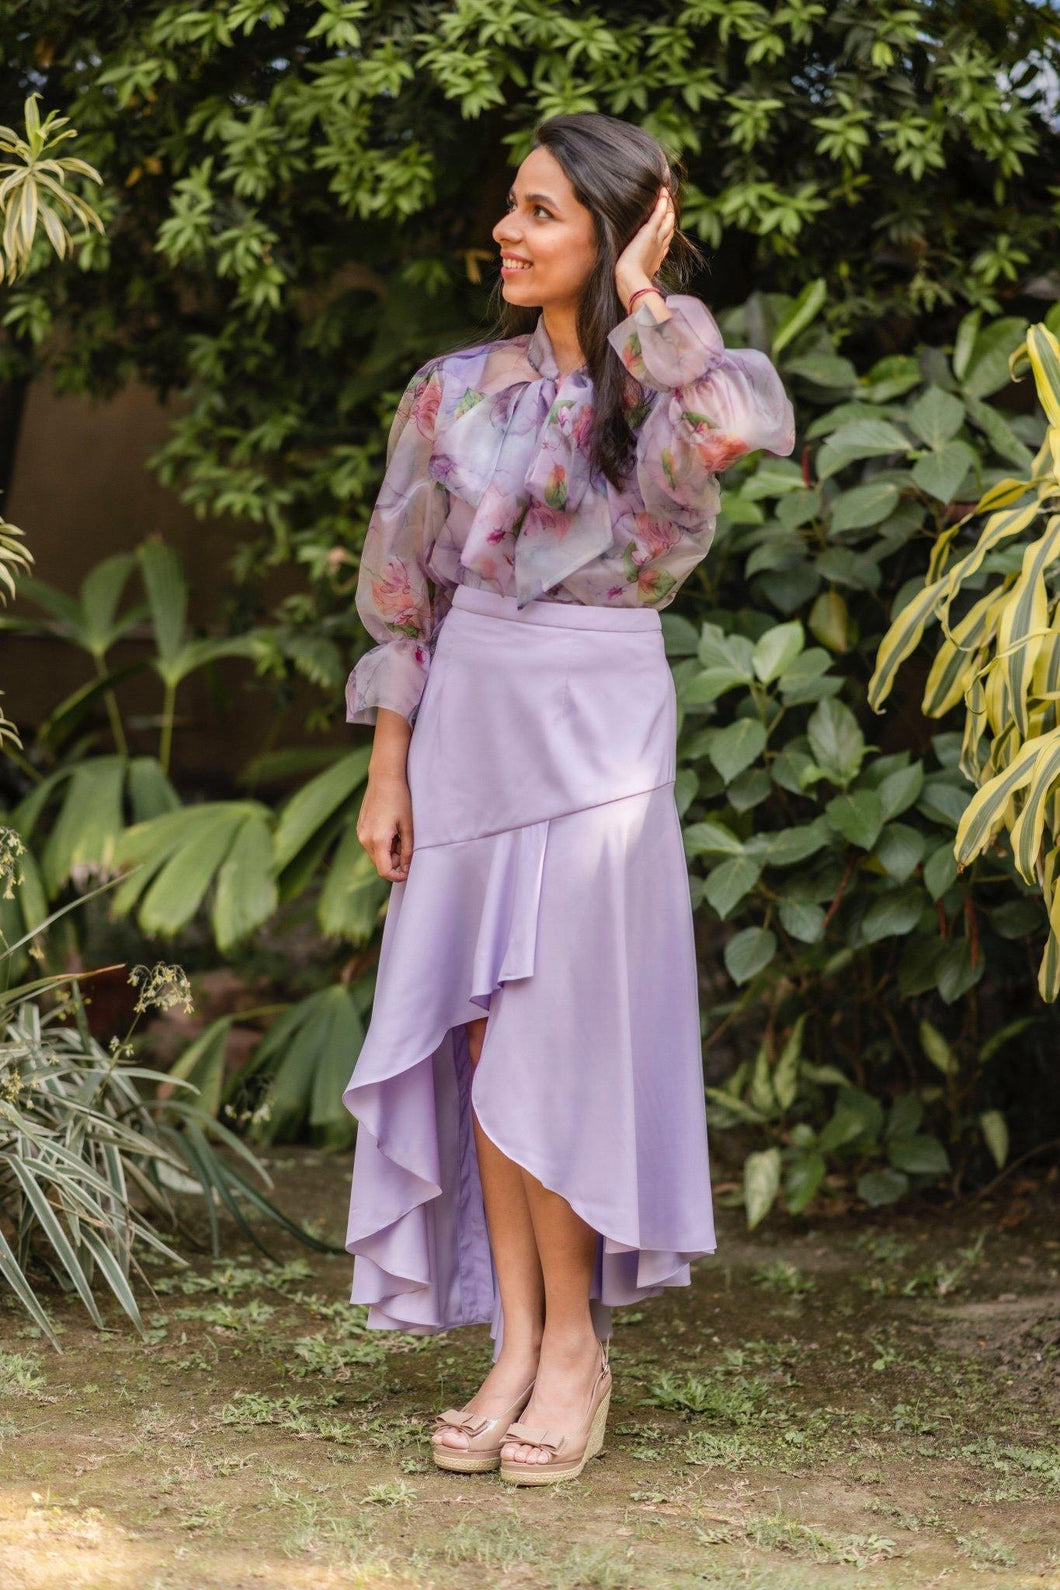 Floral printed top and skirt co-ord set - Pranati Kejriwall